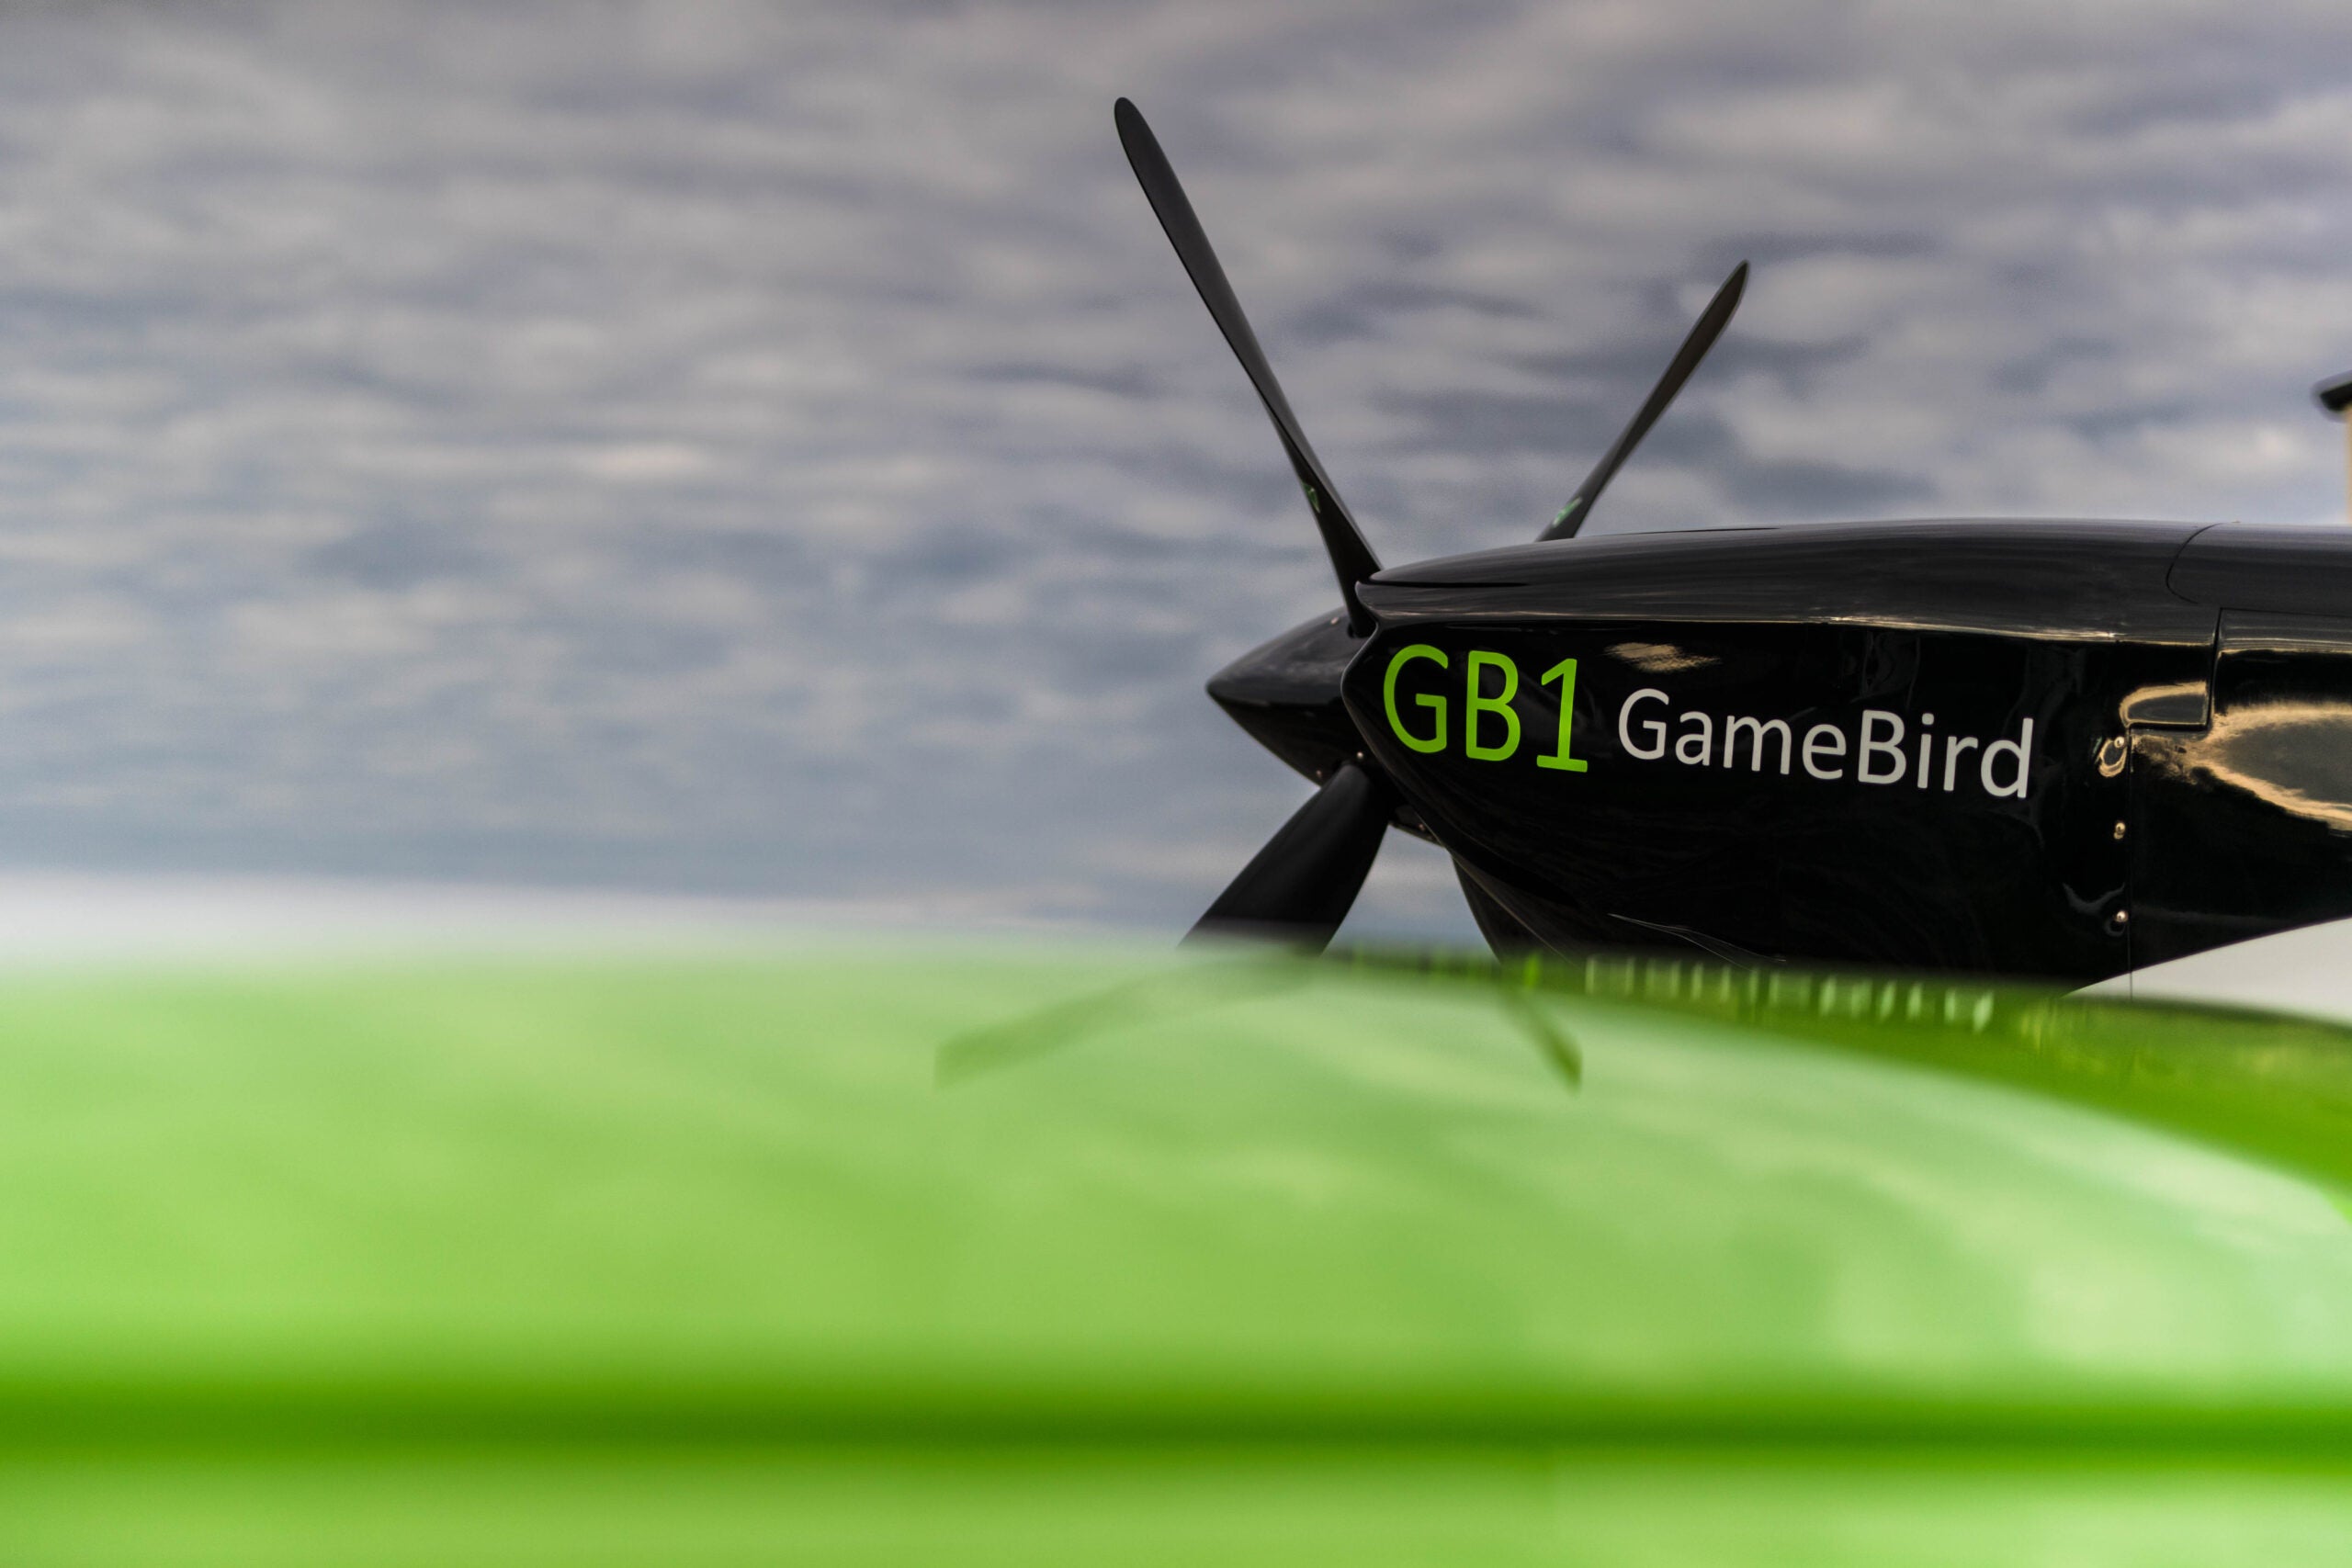 GameBird GB1